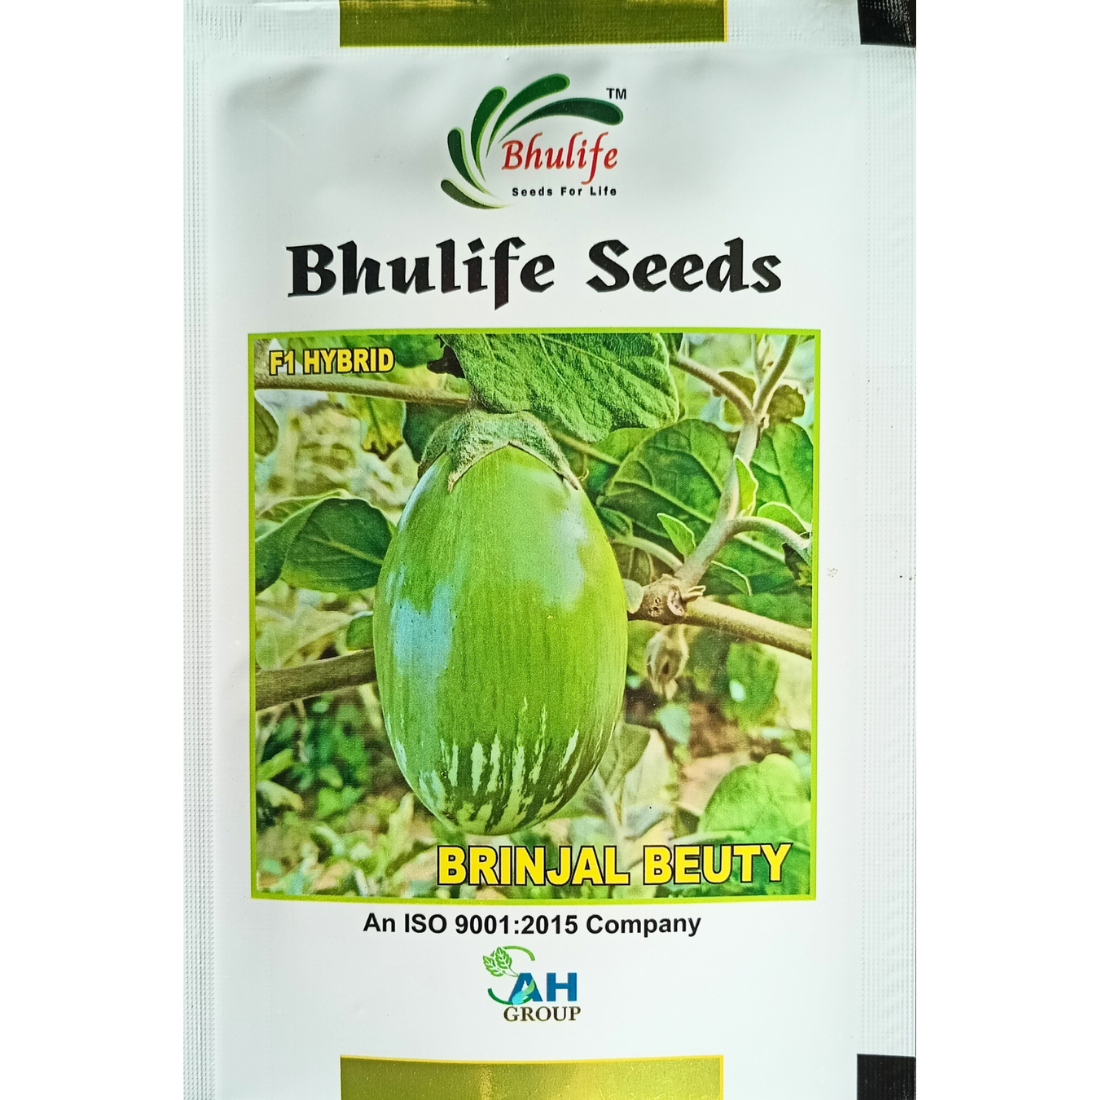 Bhulife Hybrid Brinjal Seeds Beauty (10g)